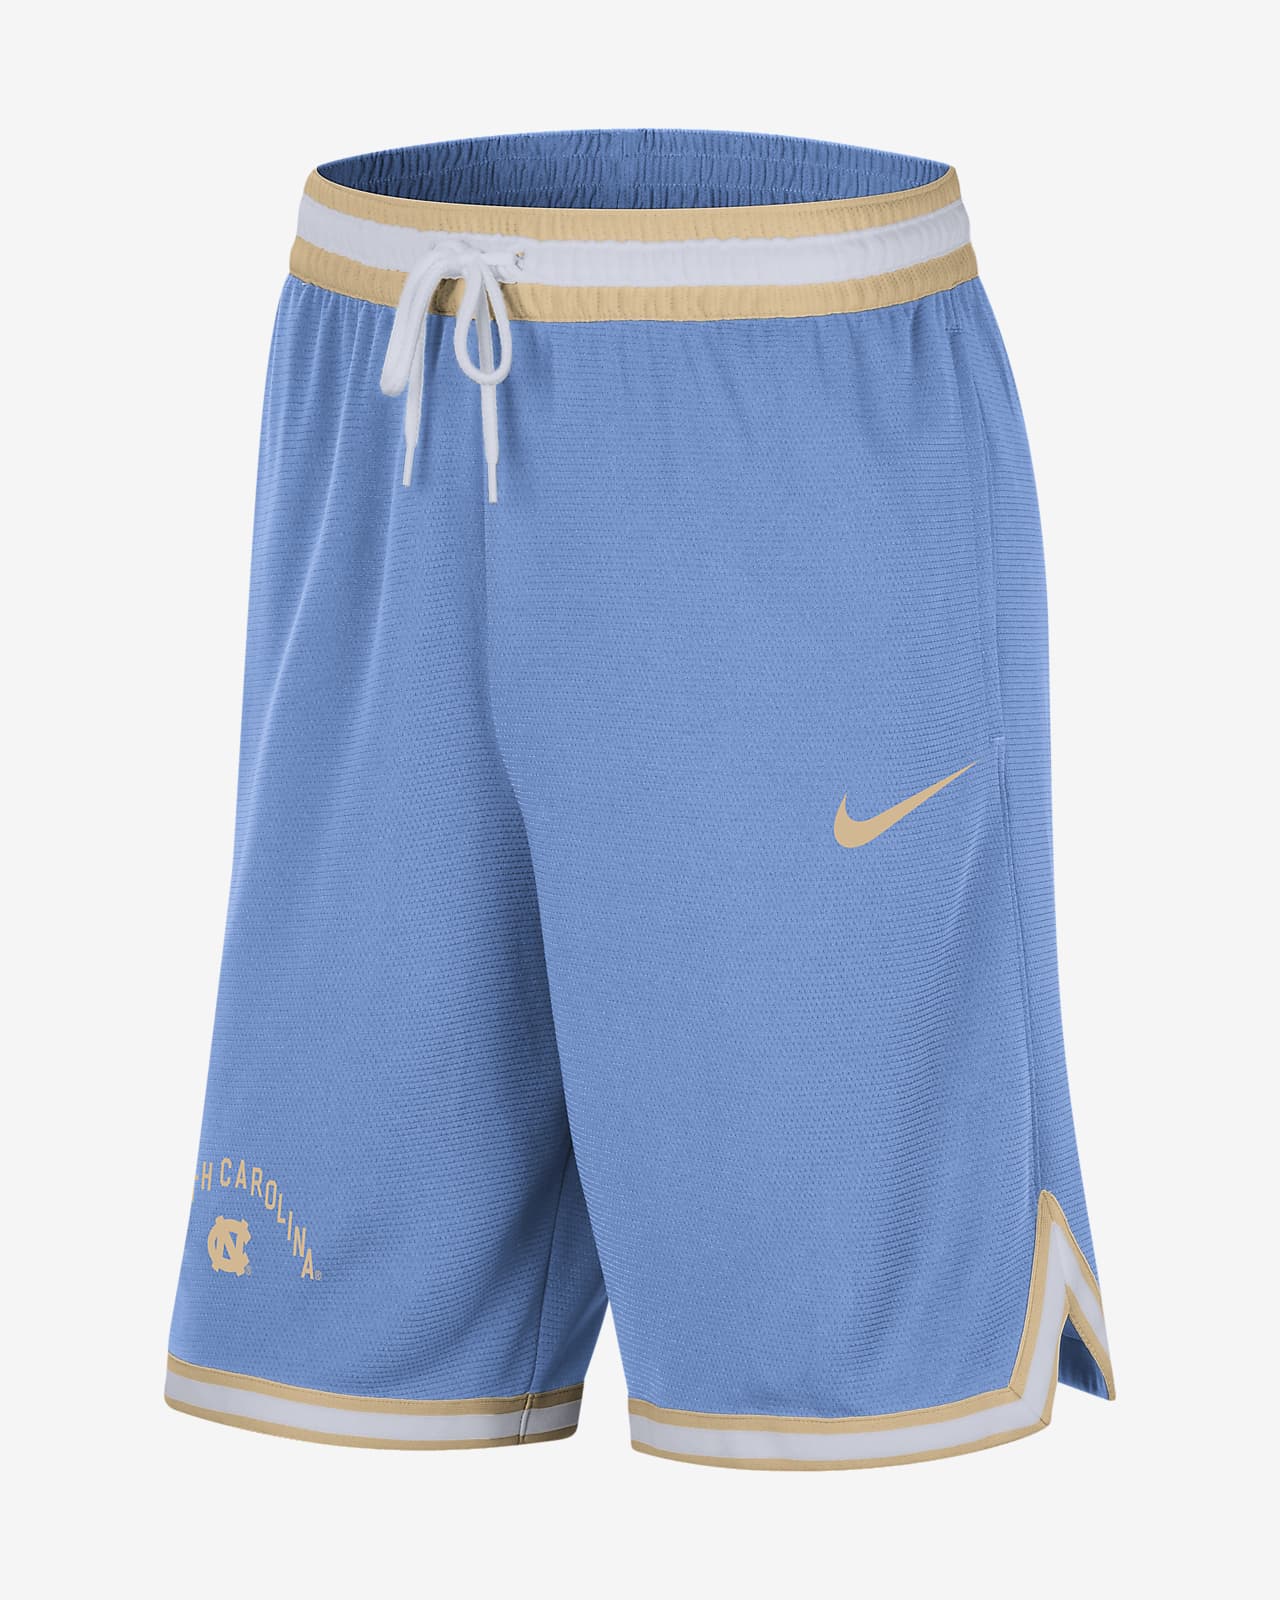 UNC DNA 3.0 Men's Nike Dri-FIT College Shorts